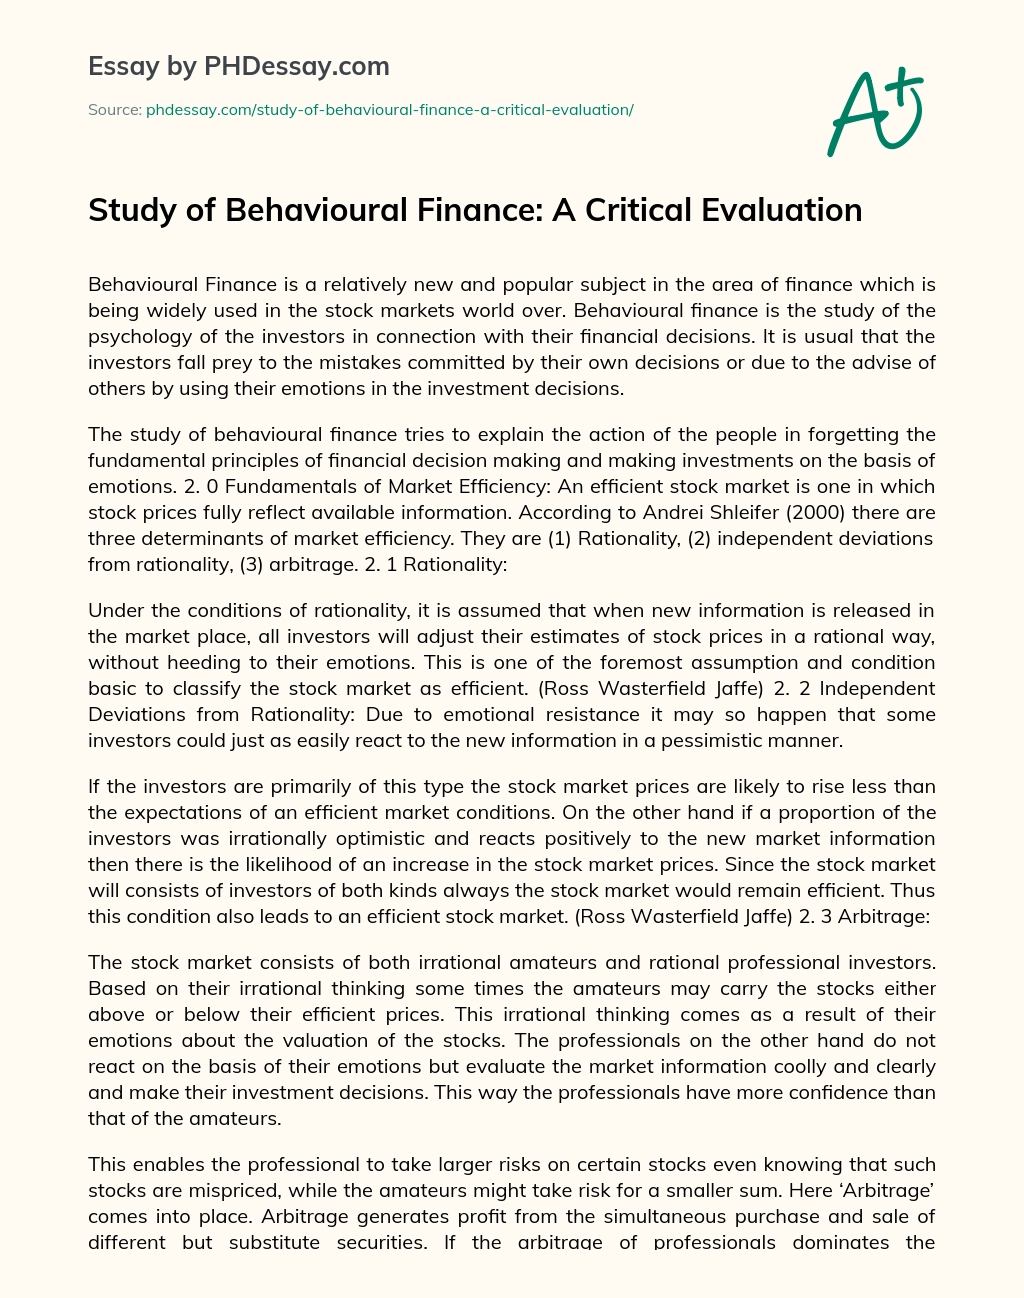 Study of Behavioural Finance: A Critical Evaluation essay